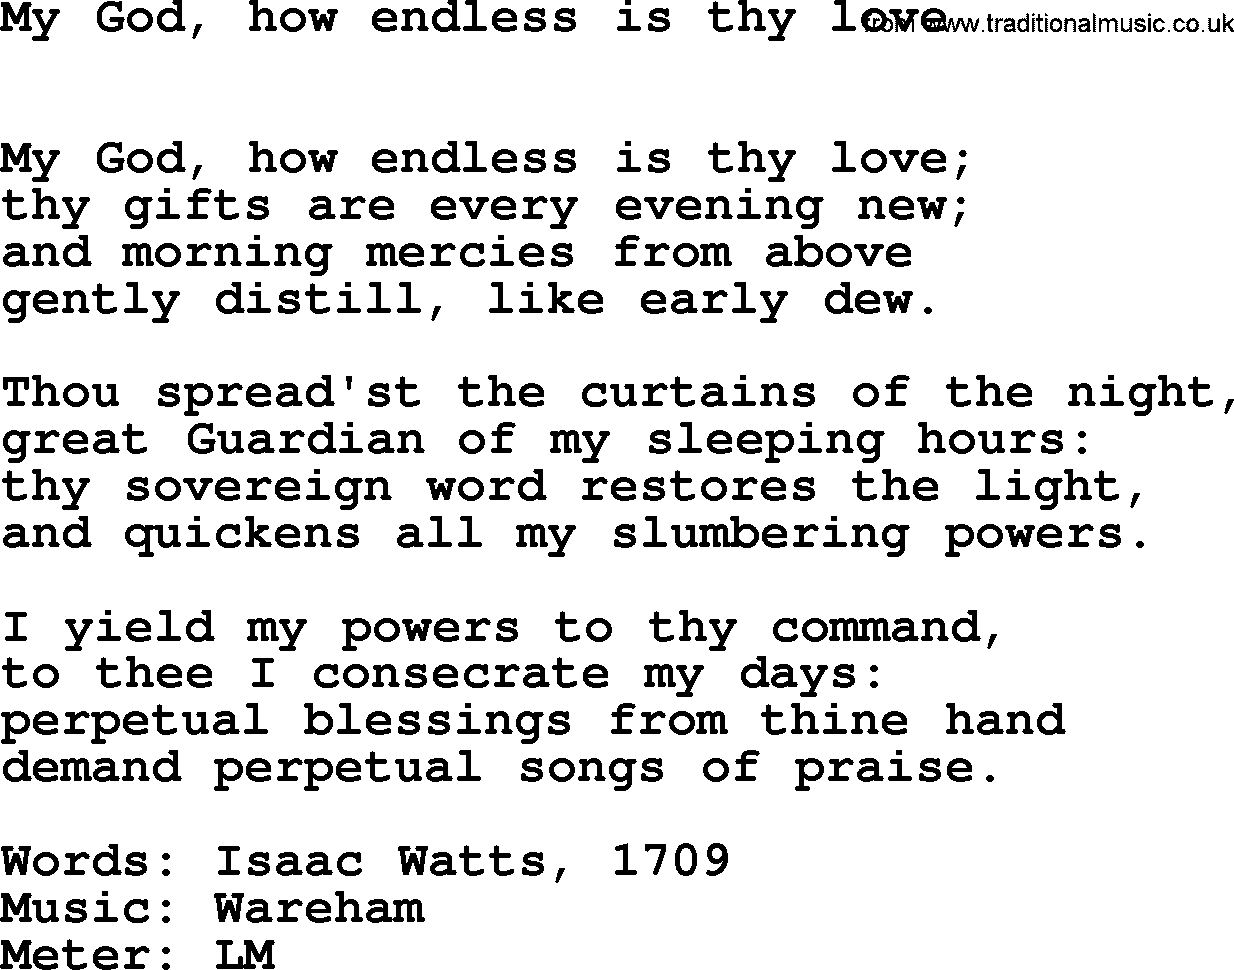 Book of Common Praise Hymn: My God, How Endless Is Thy Love.txt lyrics with midi music